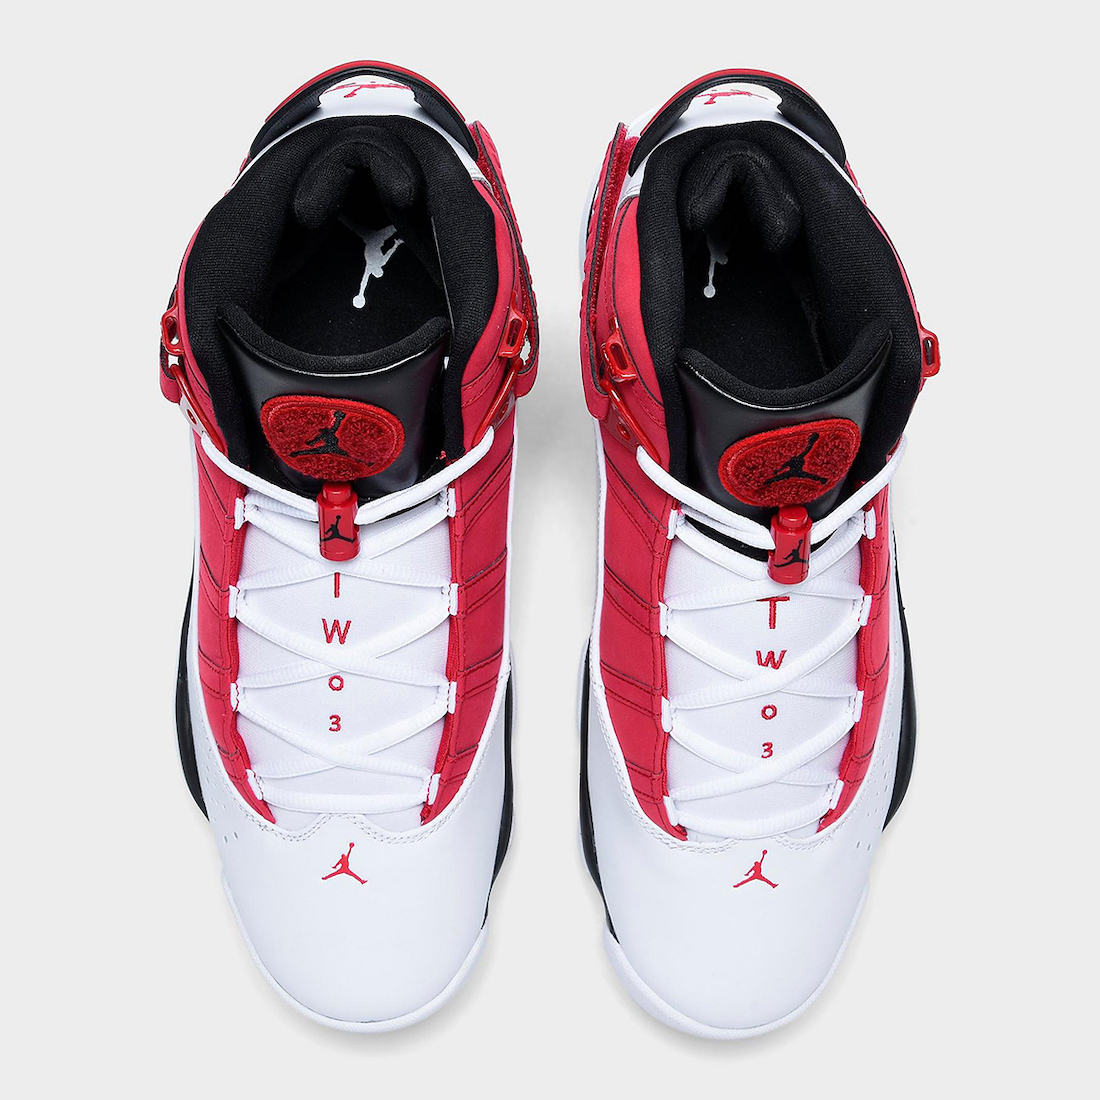 Jordan 6 Rings White Black Red 322992-106 Release Date